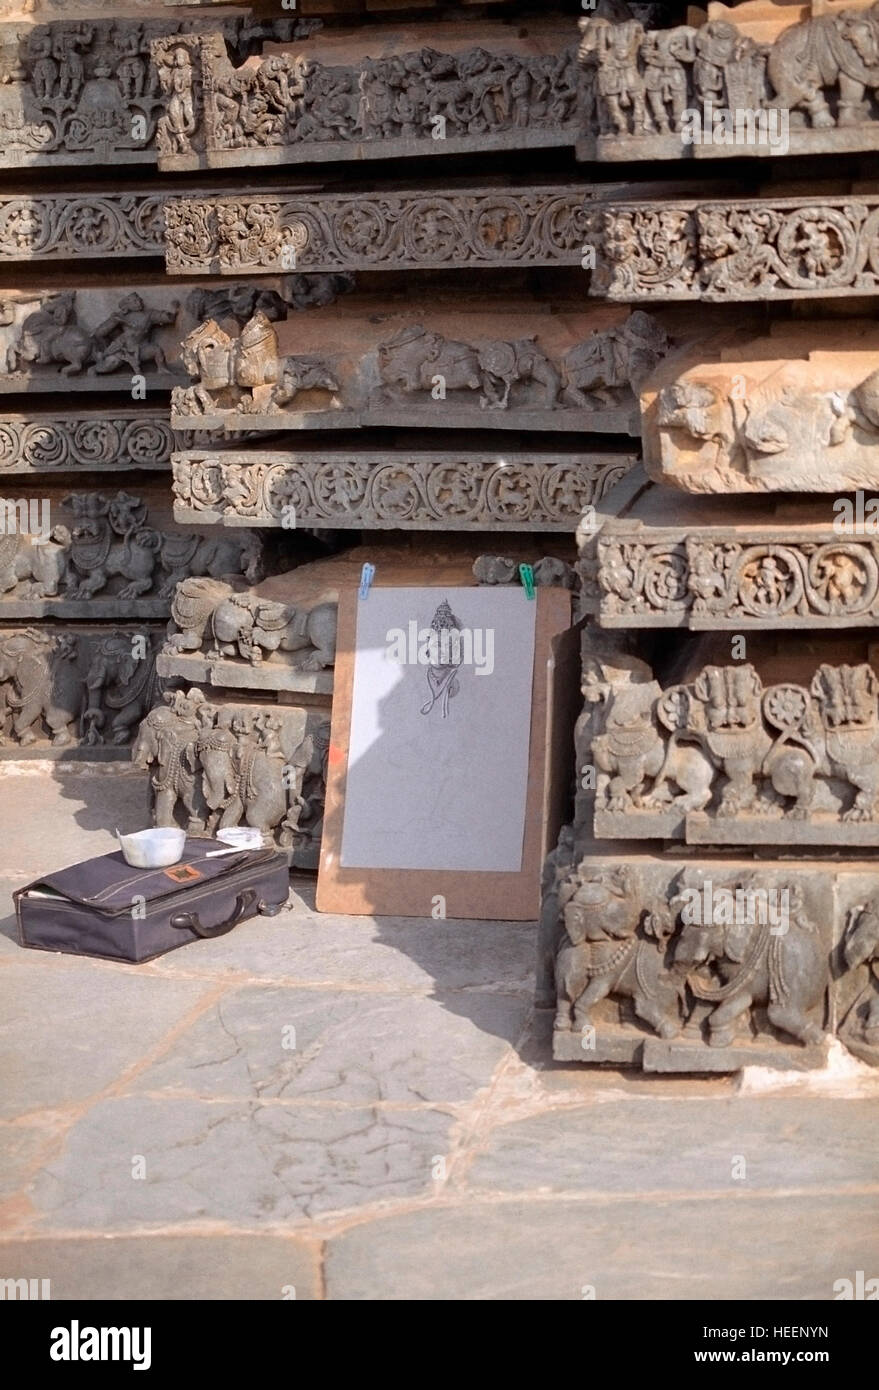 La peinture de l'artiste les monuments de Halebid, Karnataka, Inde Banque D'Images